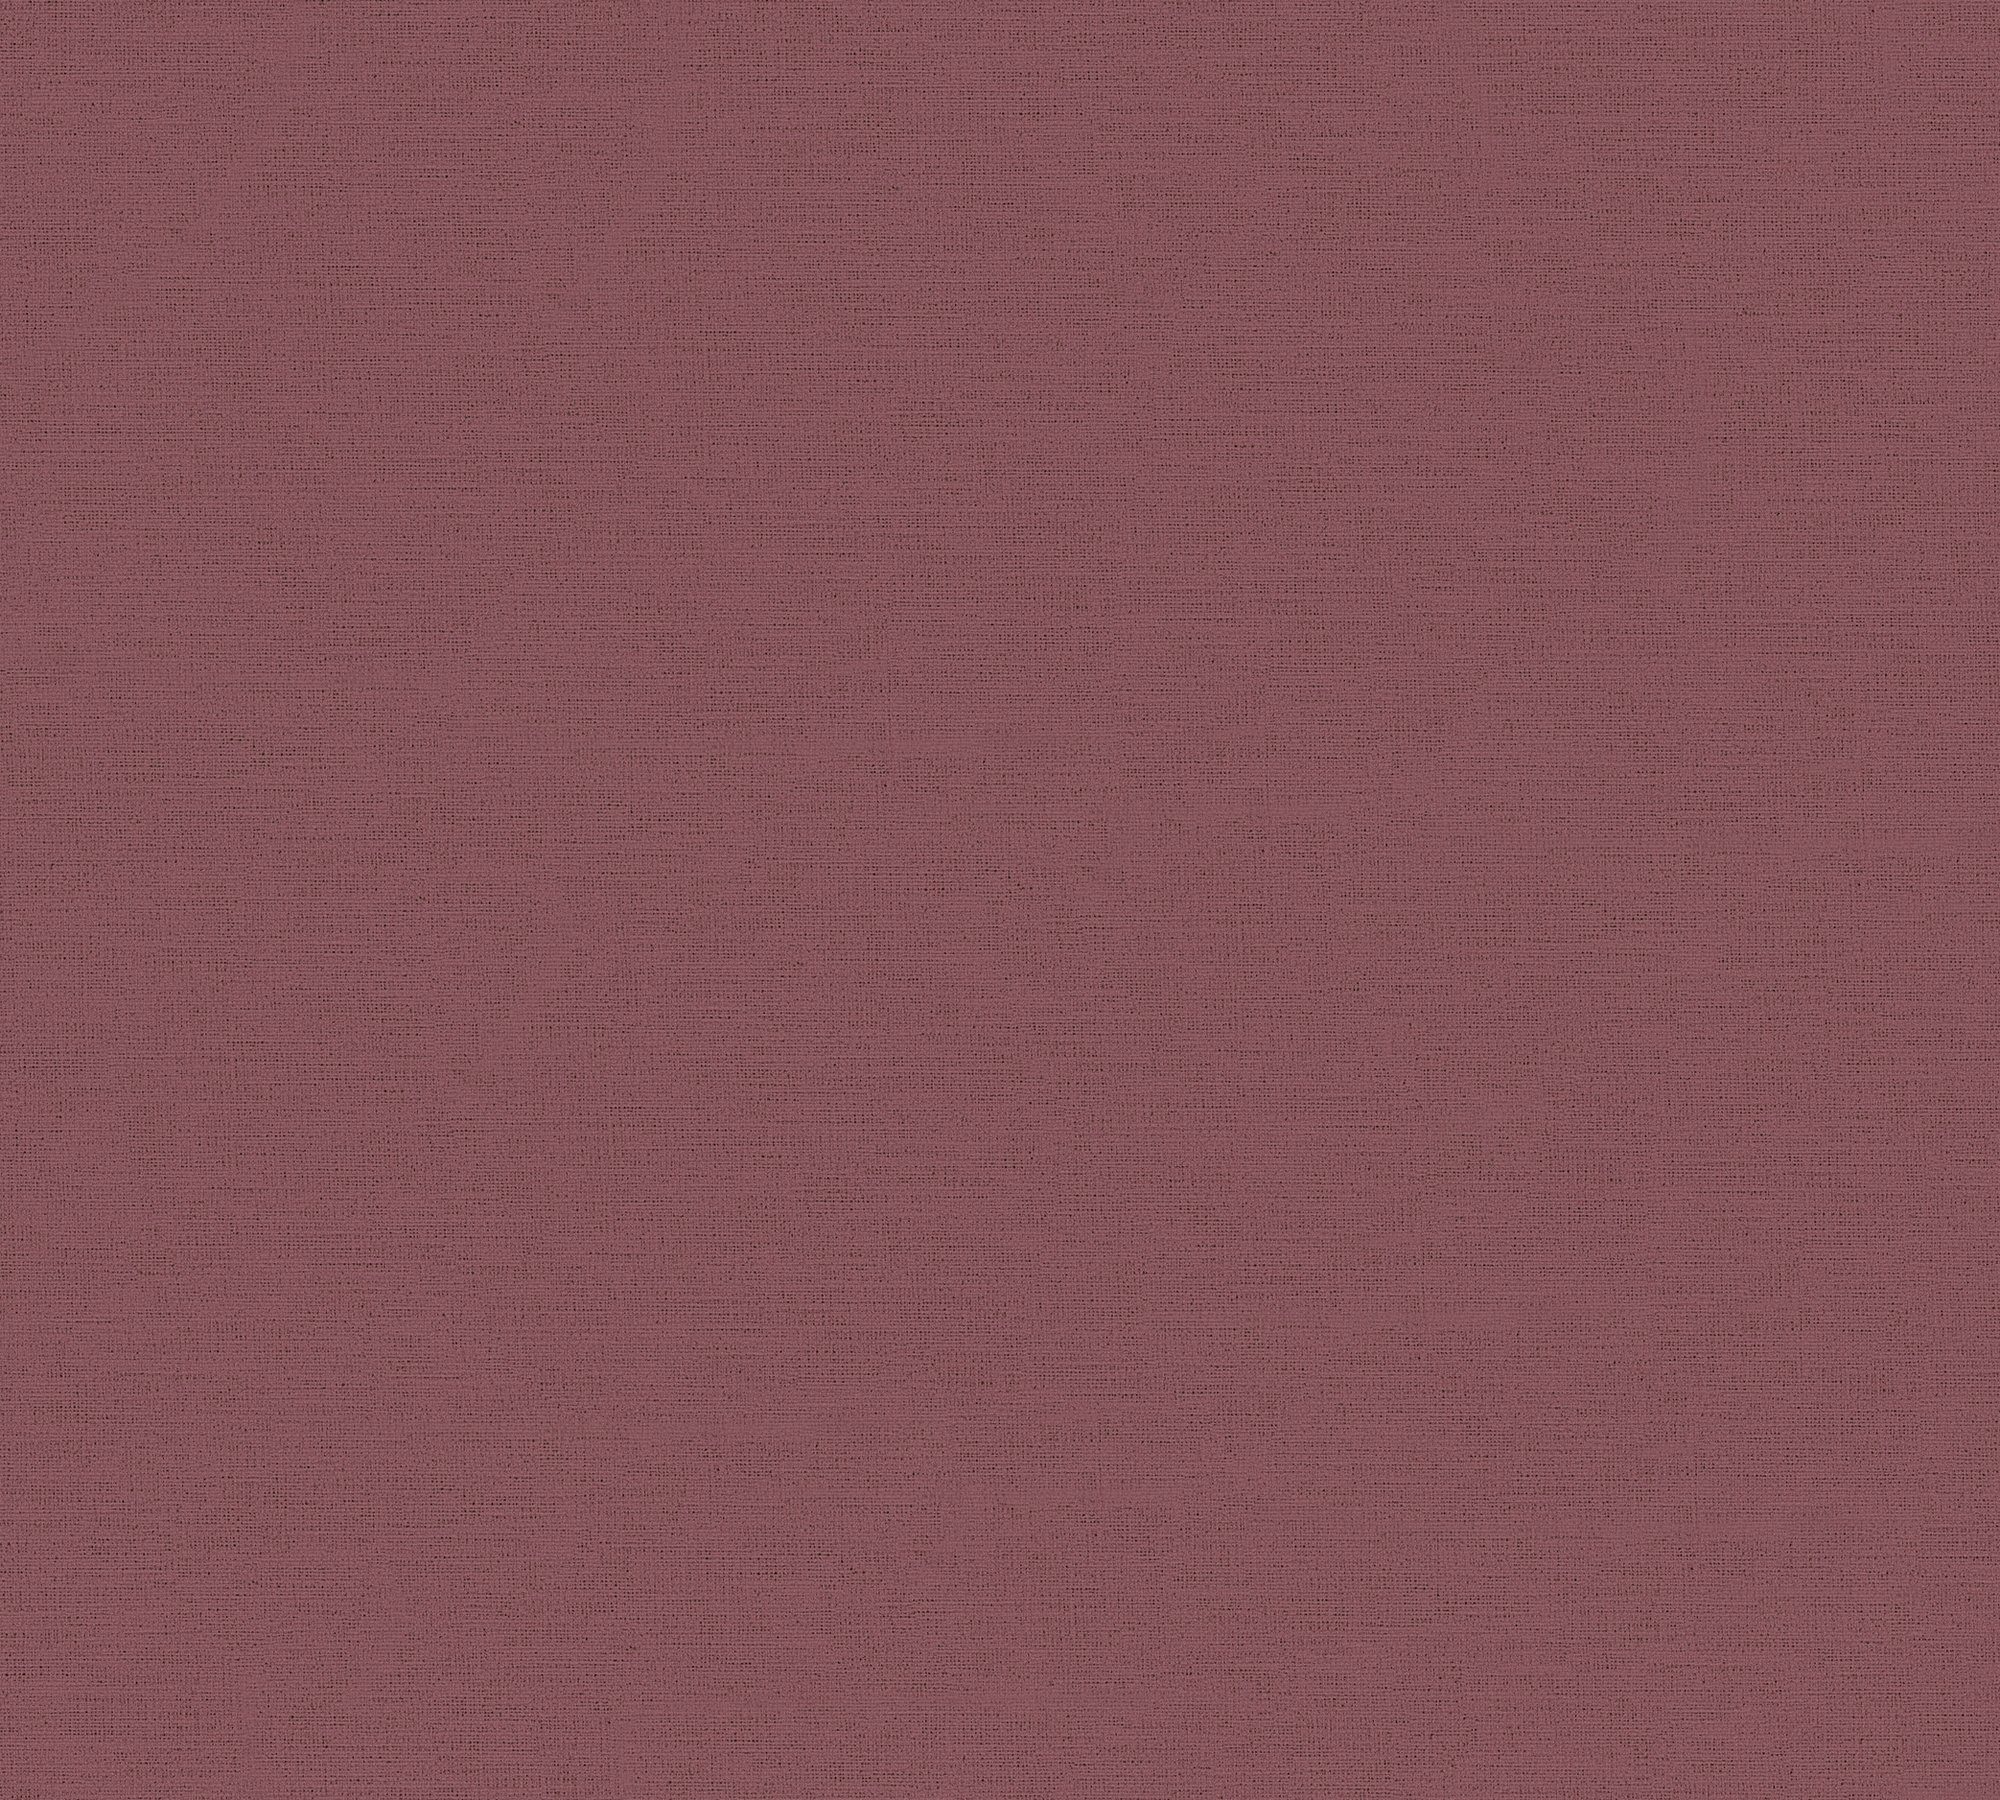 Tapete, Unitapete Création geprägt, strukturiert einfarbige Antigua matt, A.S. leicht St), violett,lila,bordeaux (1 Vliestapete